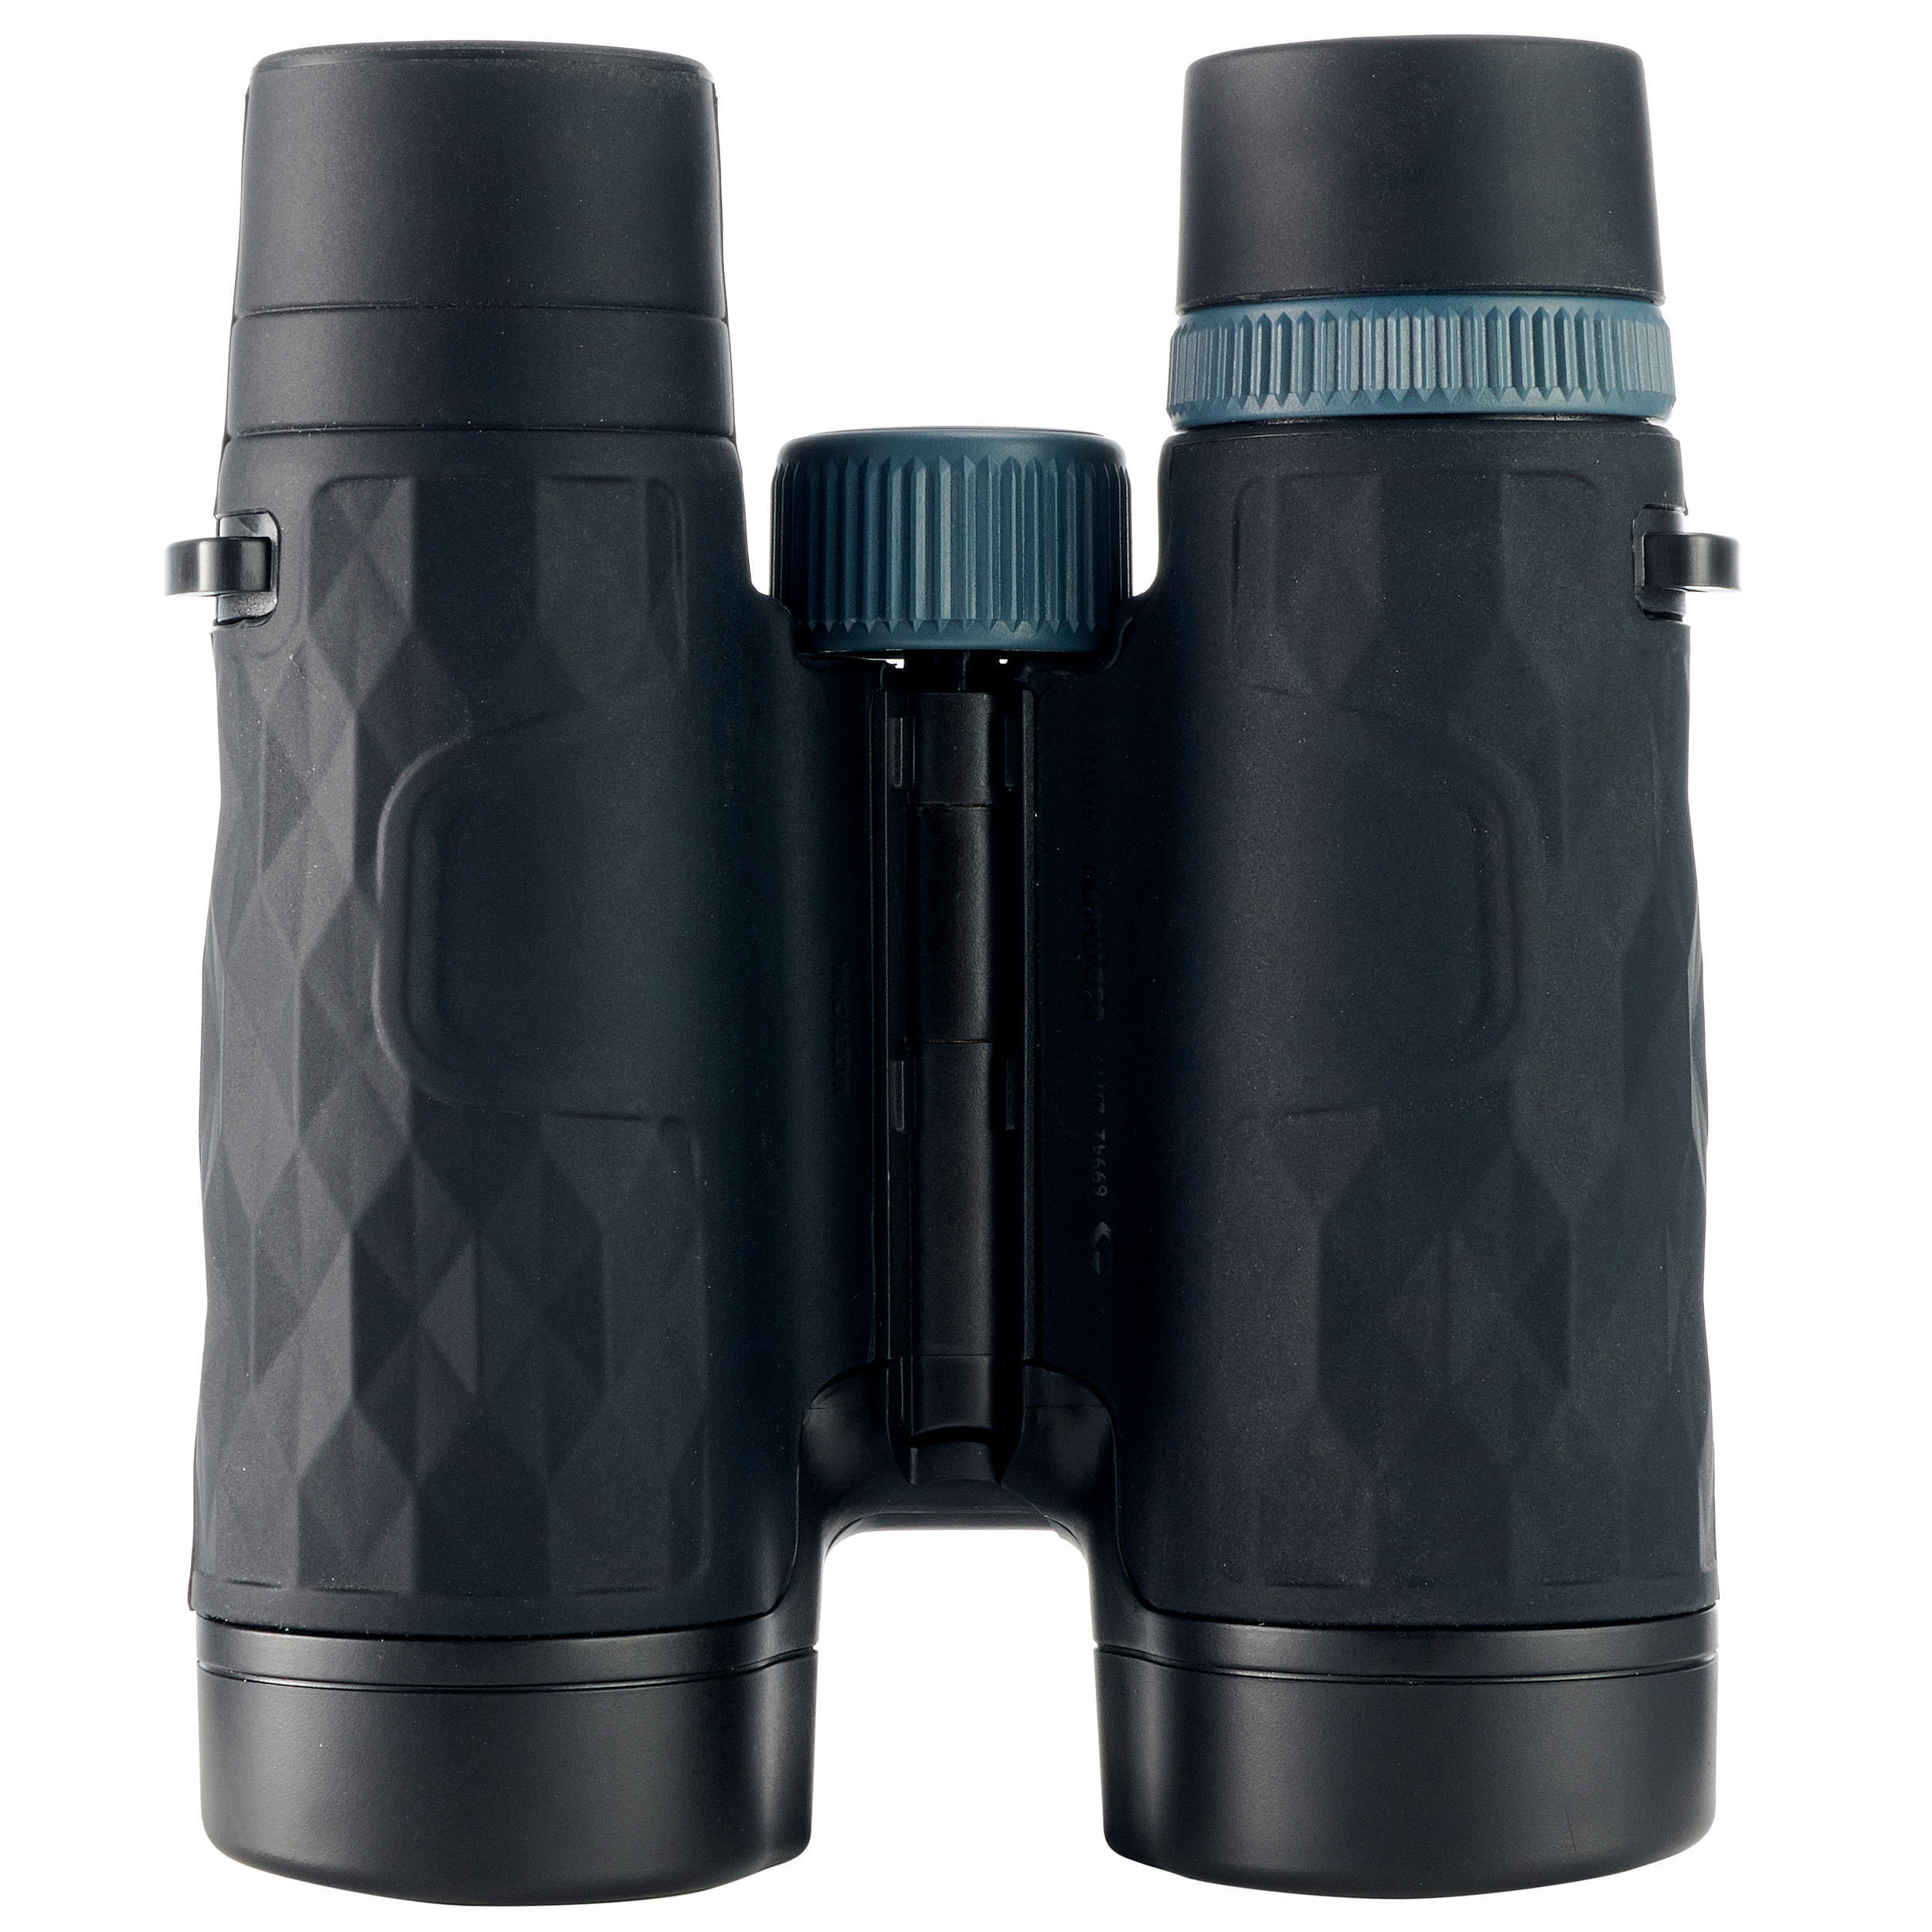 Adult Hiking binoculars with adjustment - MH B560 - x12 magnification - Black 4/10